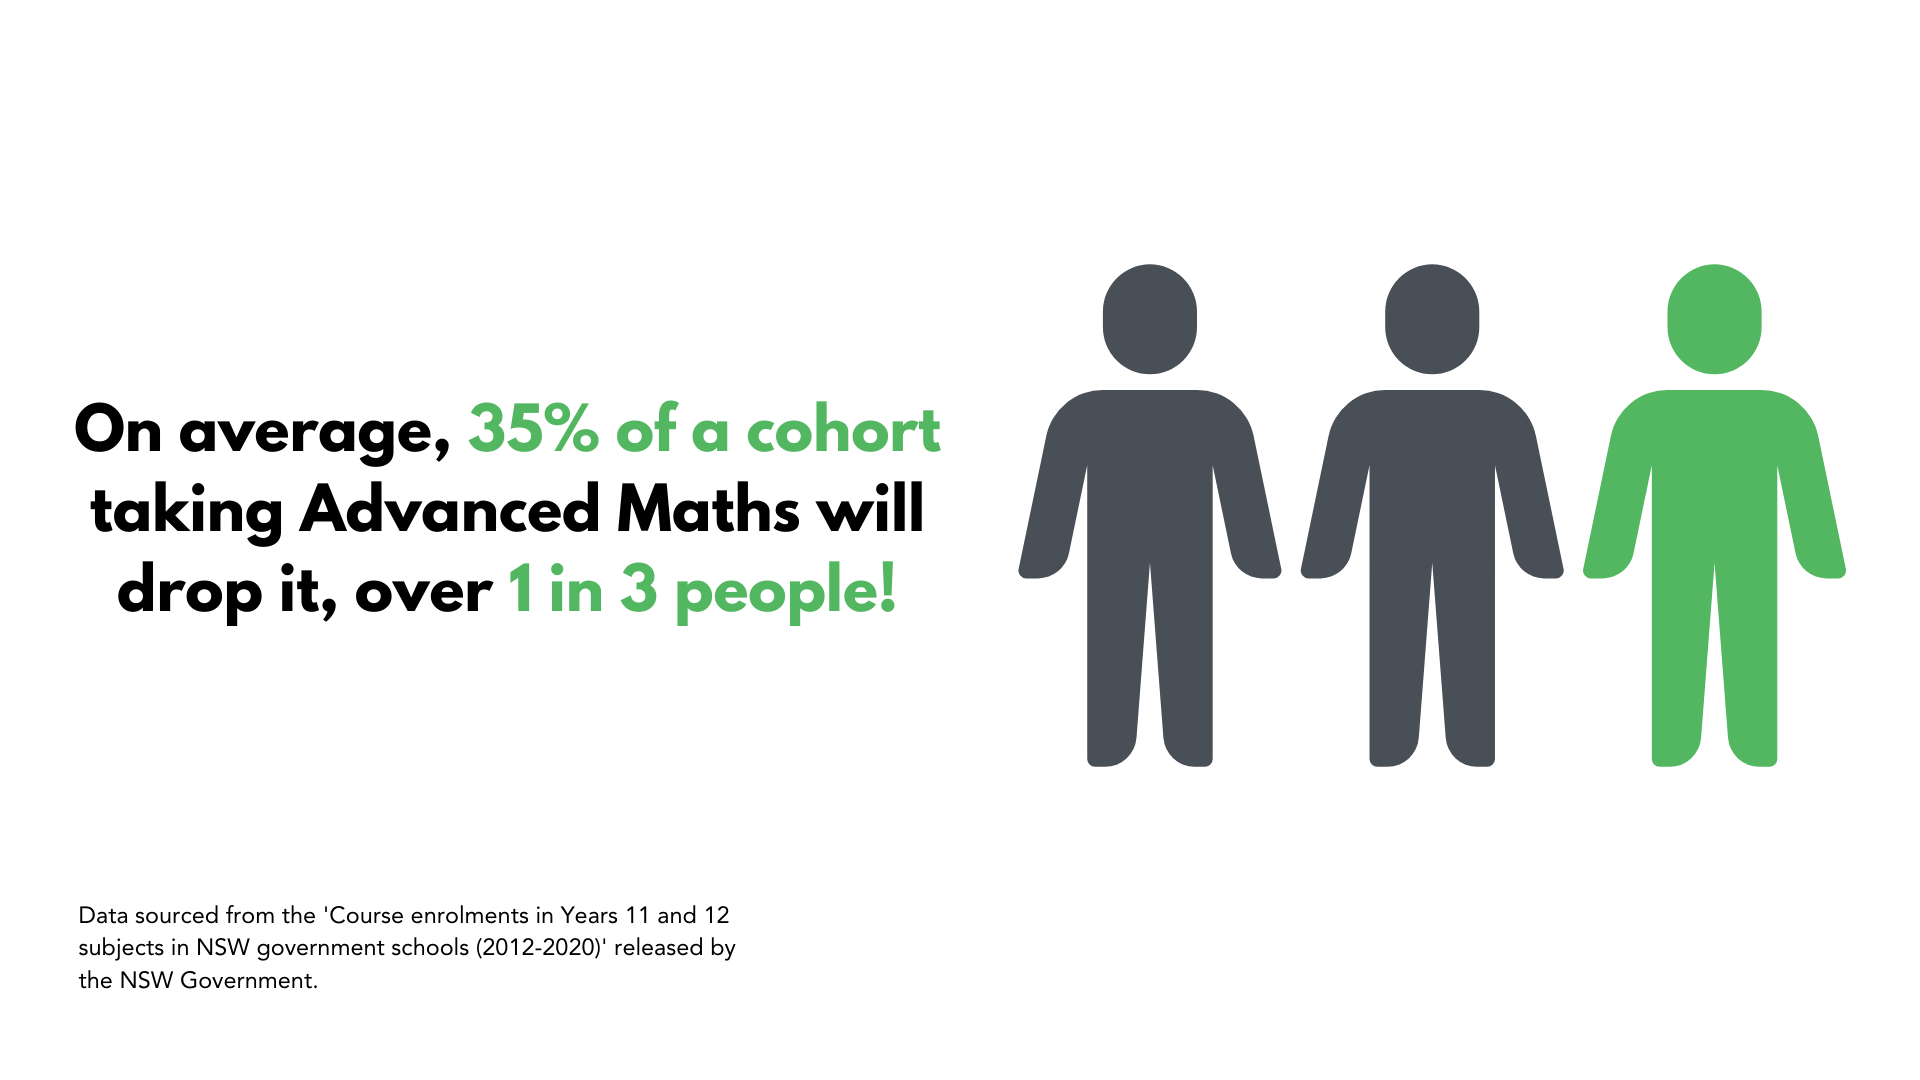 How many people drop advanced maths?